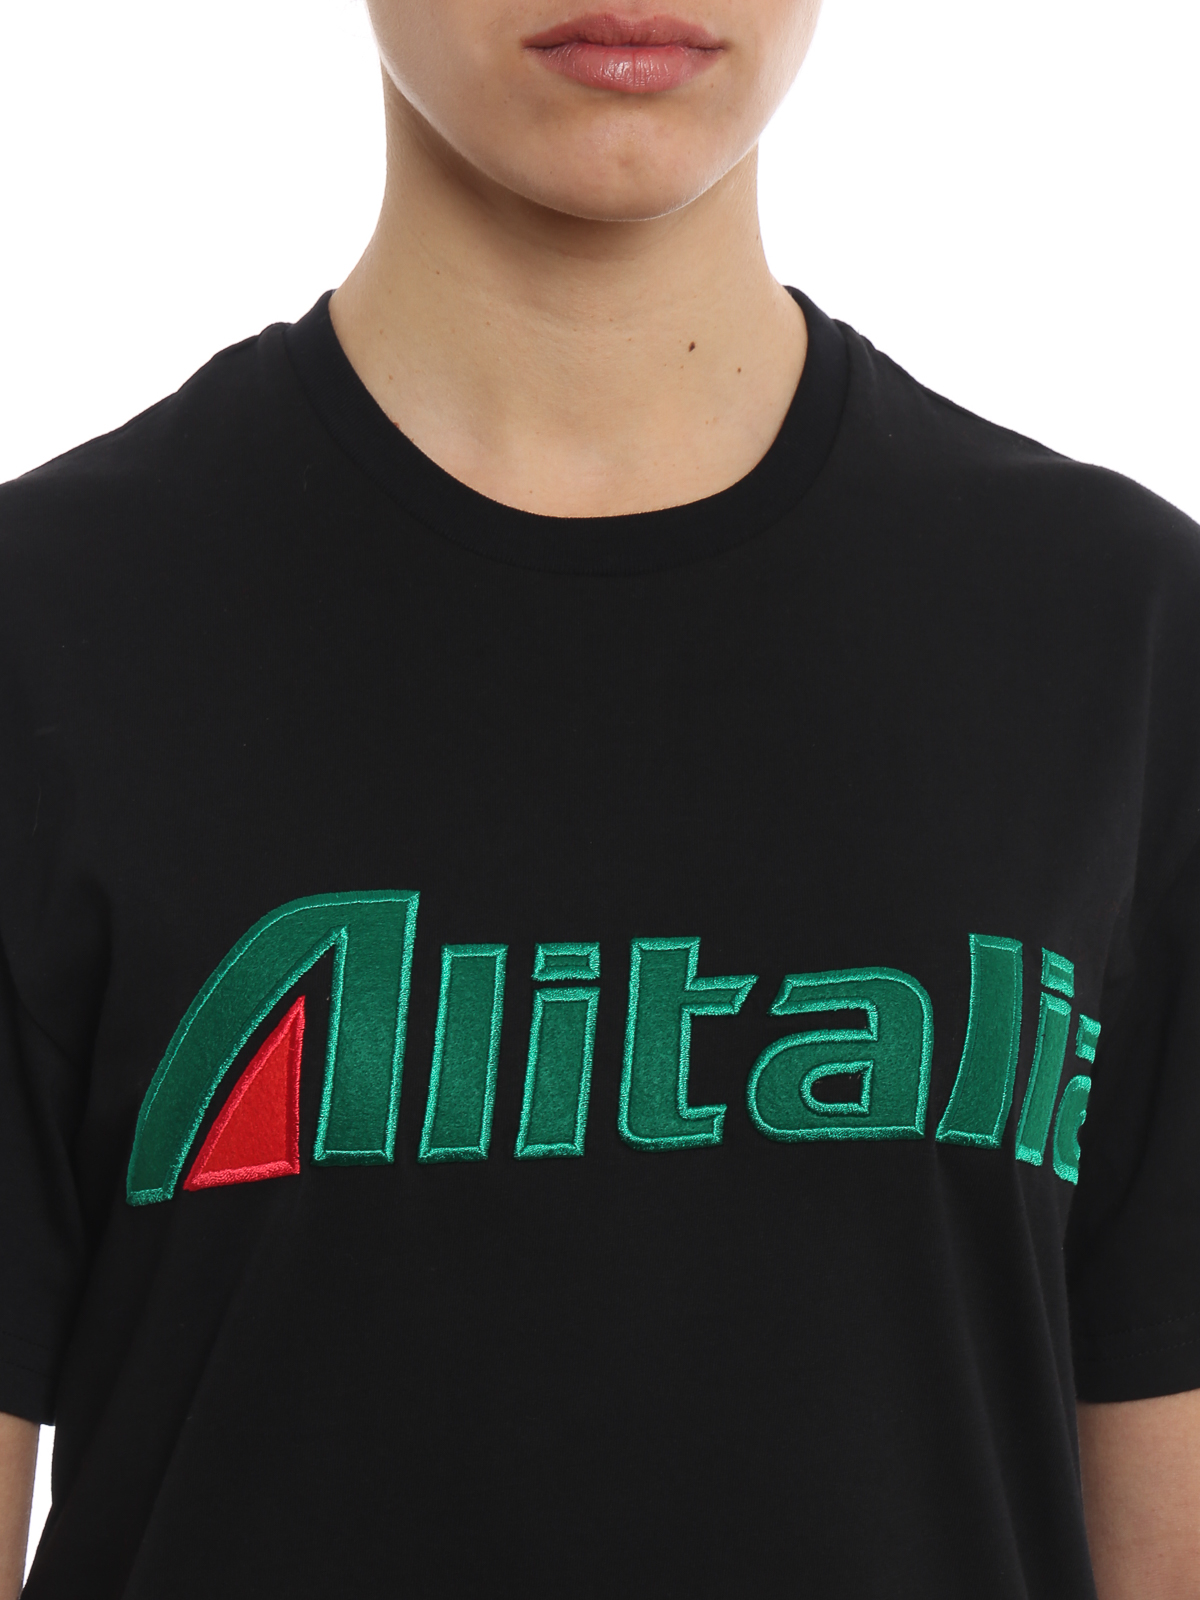 Andre steder cirkulære velsignelse T-shirts Alberta Ferretti - Alitalia embroidery logo black T-shirt -  J070116720555